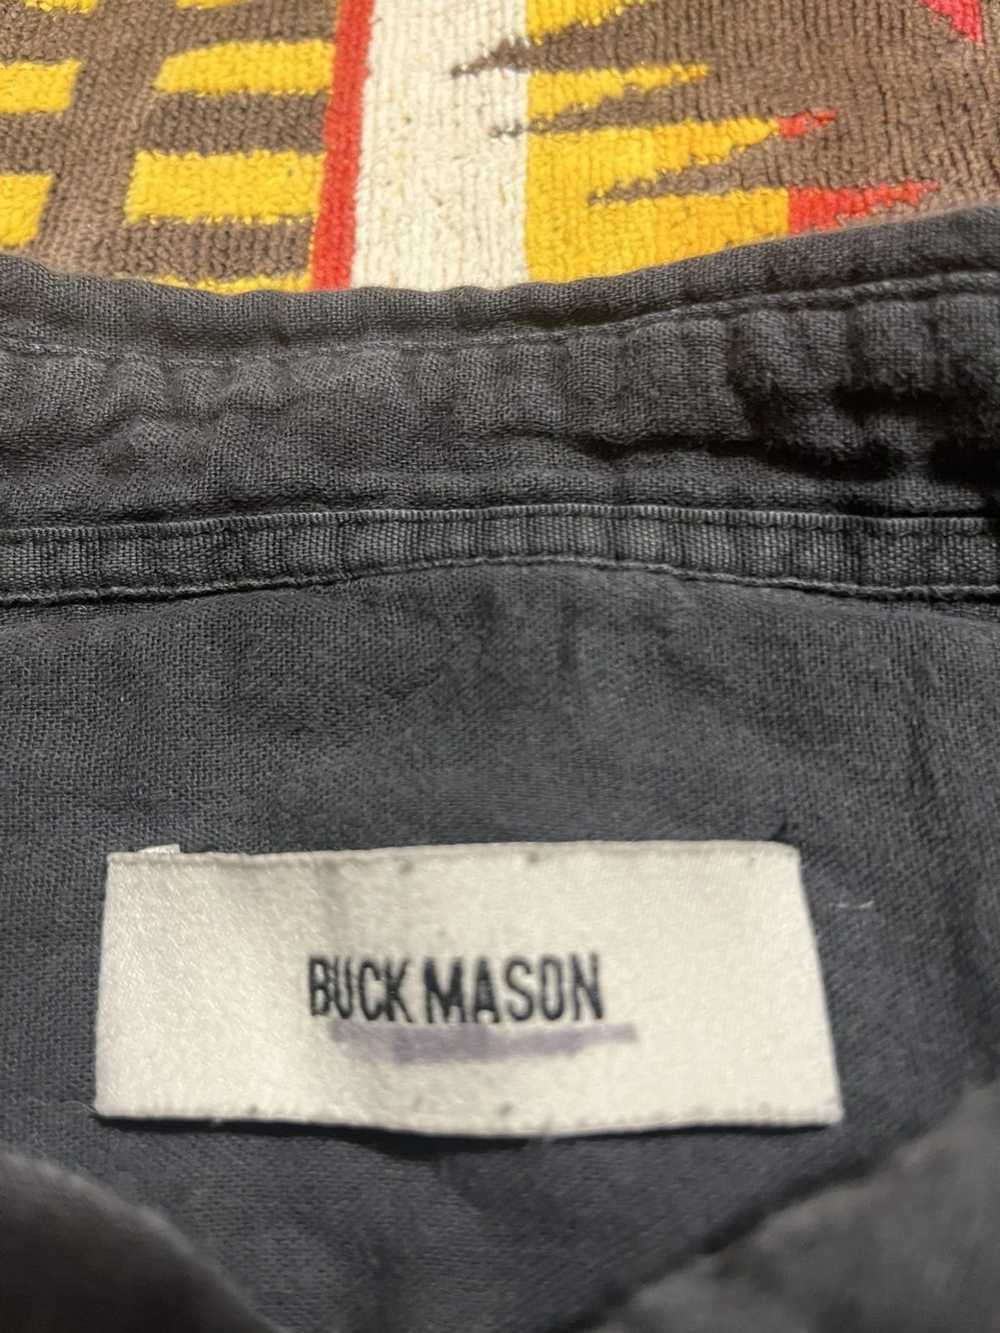 Buck Mason Buck mason soft button shirt faded bla… - image 4